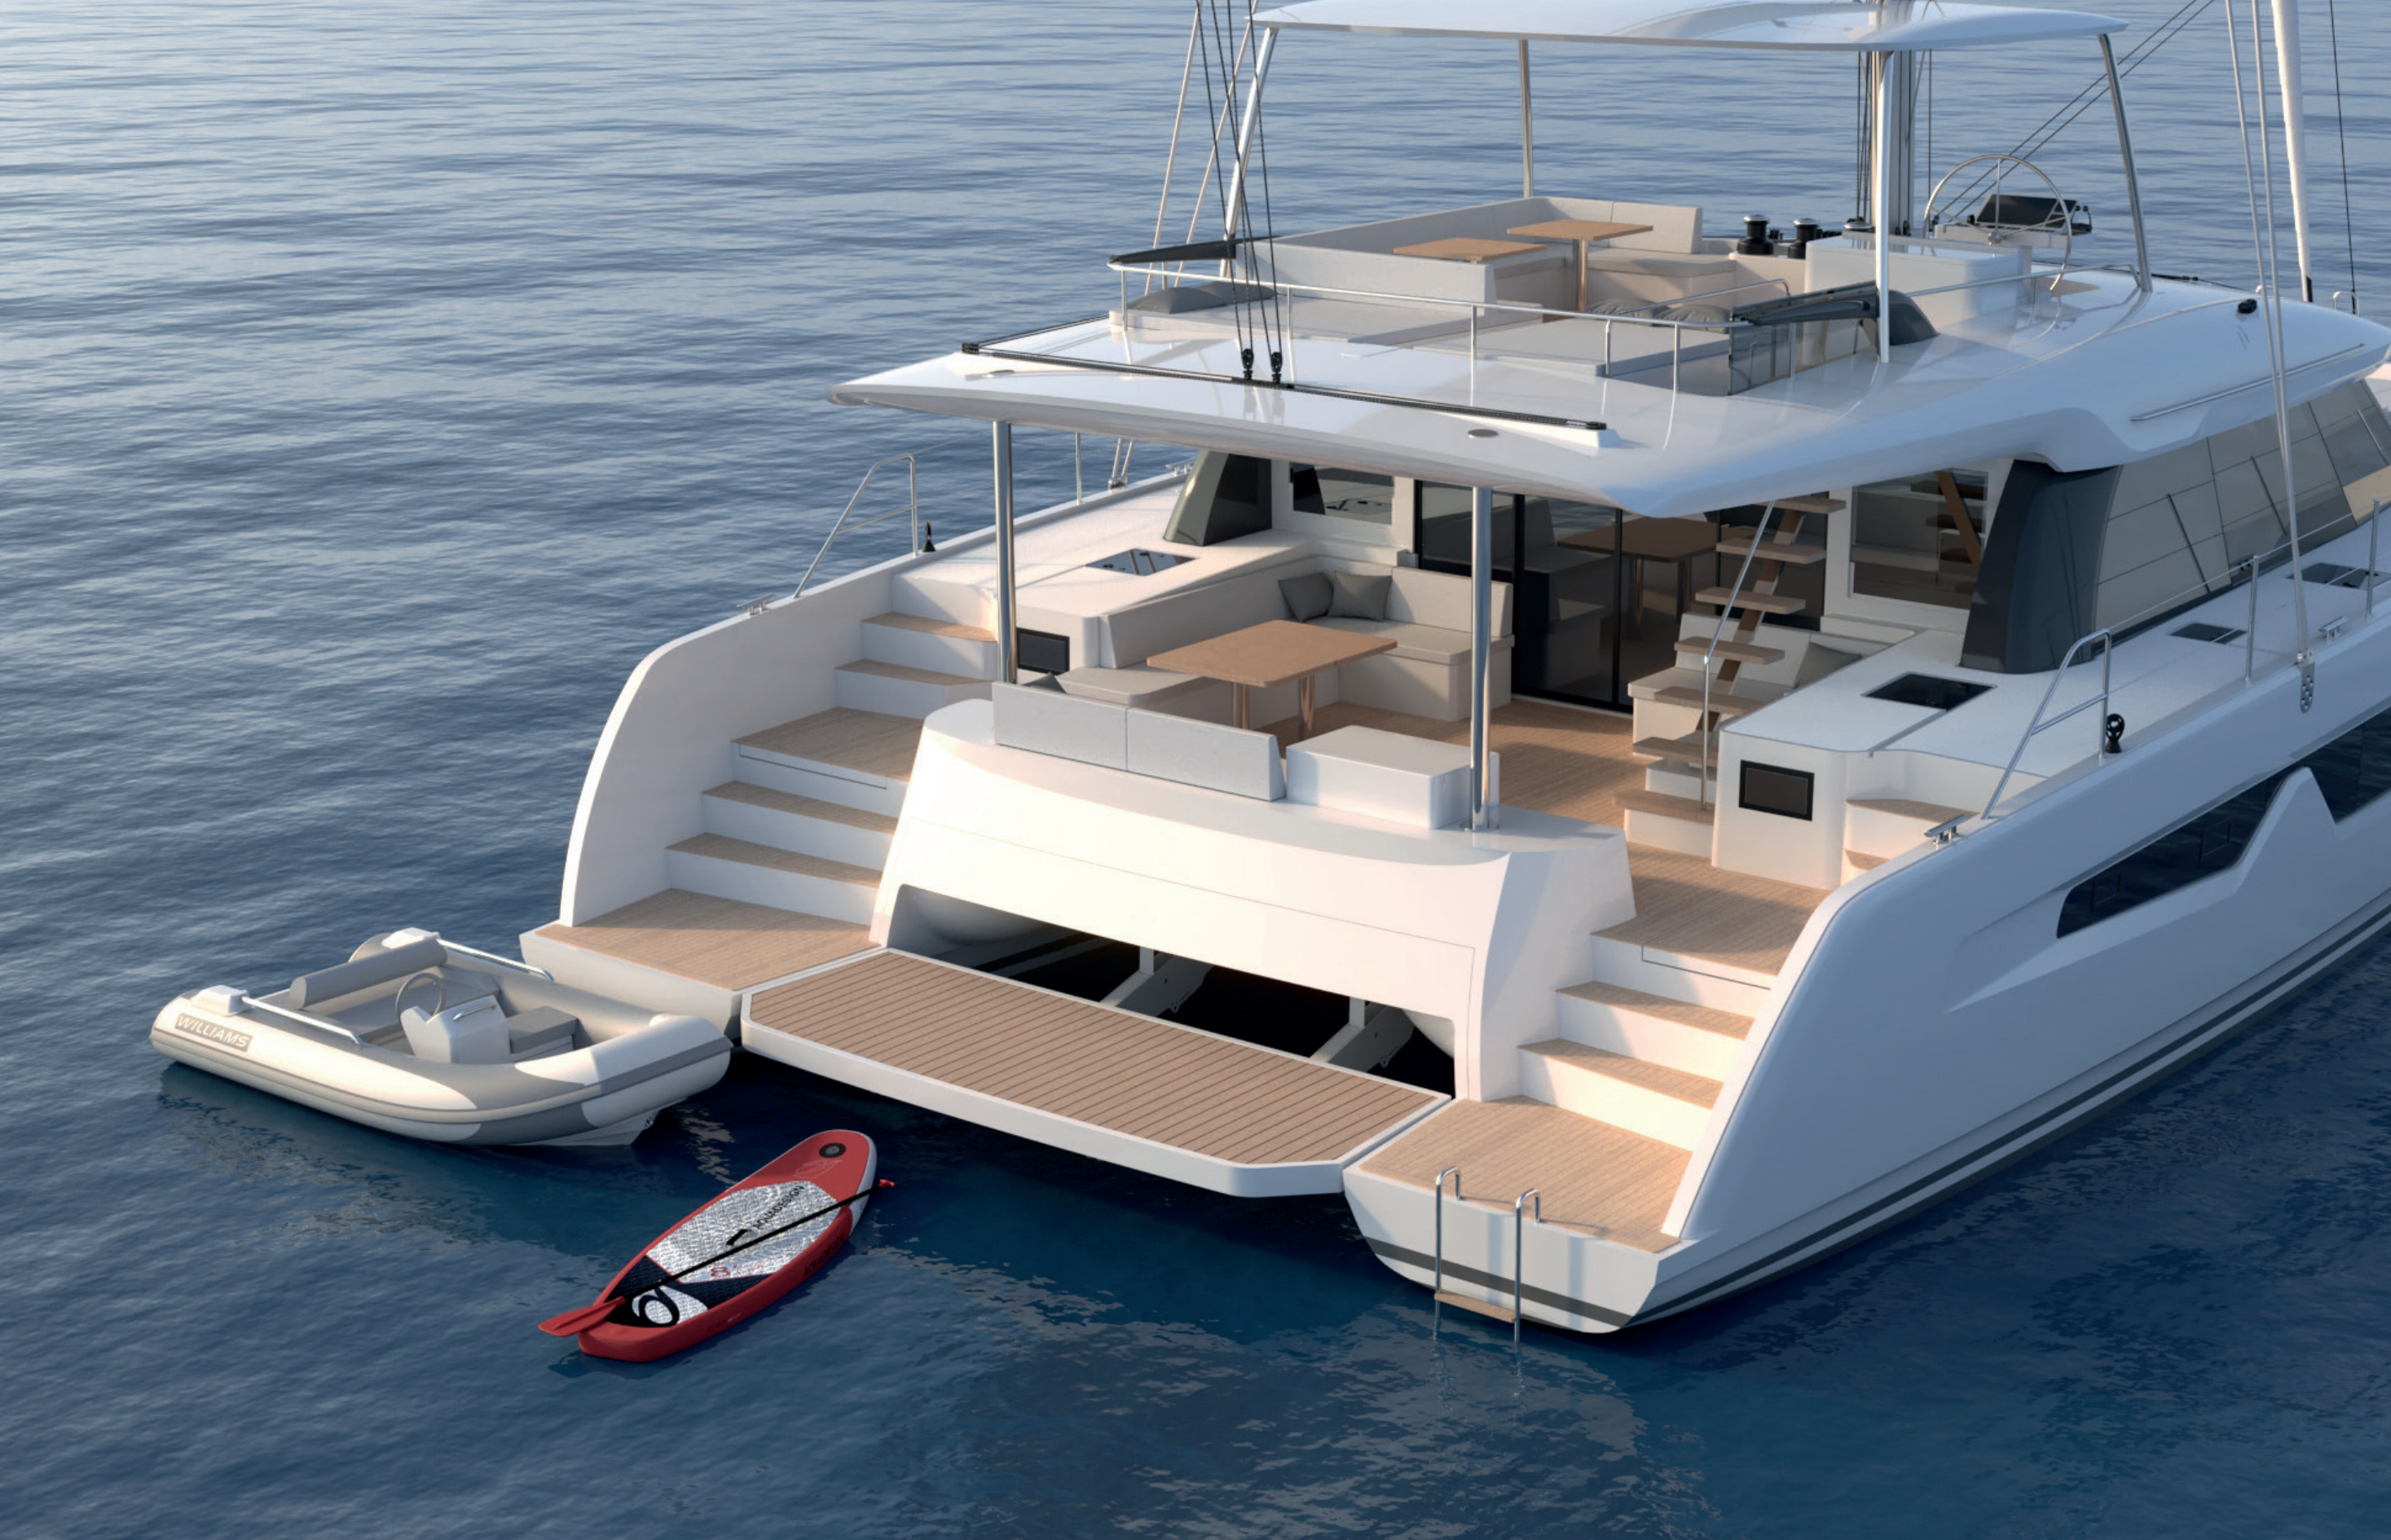 Antares帆船游艇设计_交通|闲逛-优秀工业设计作品-优概念